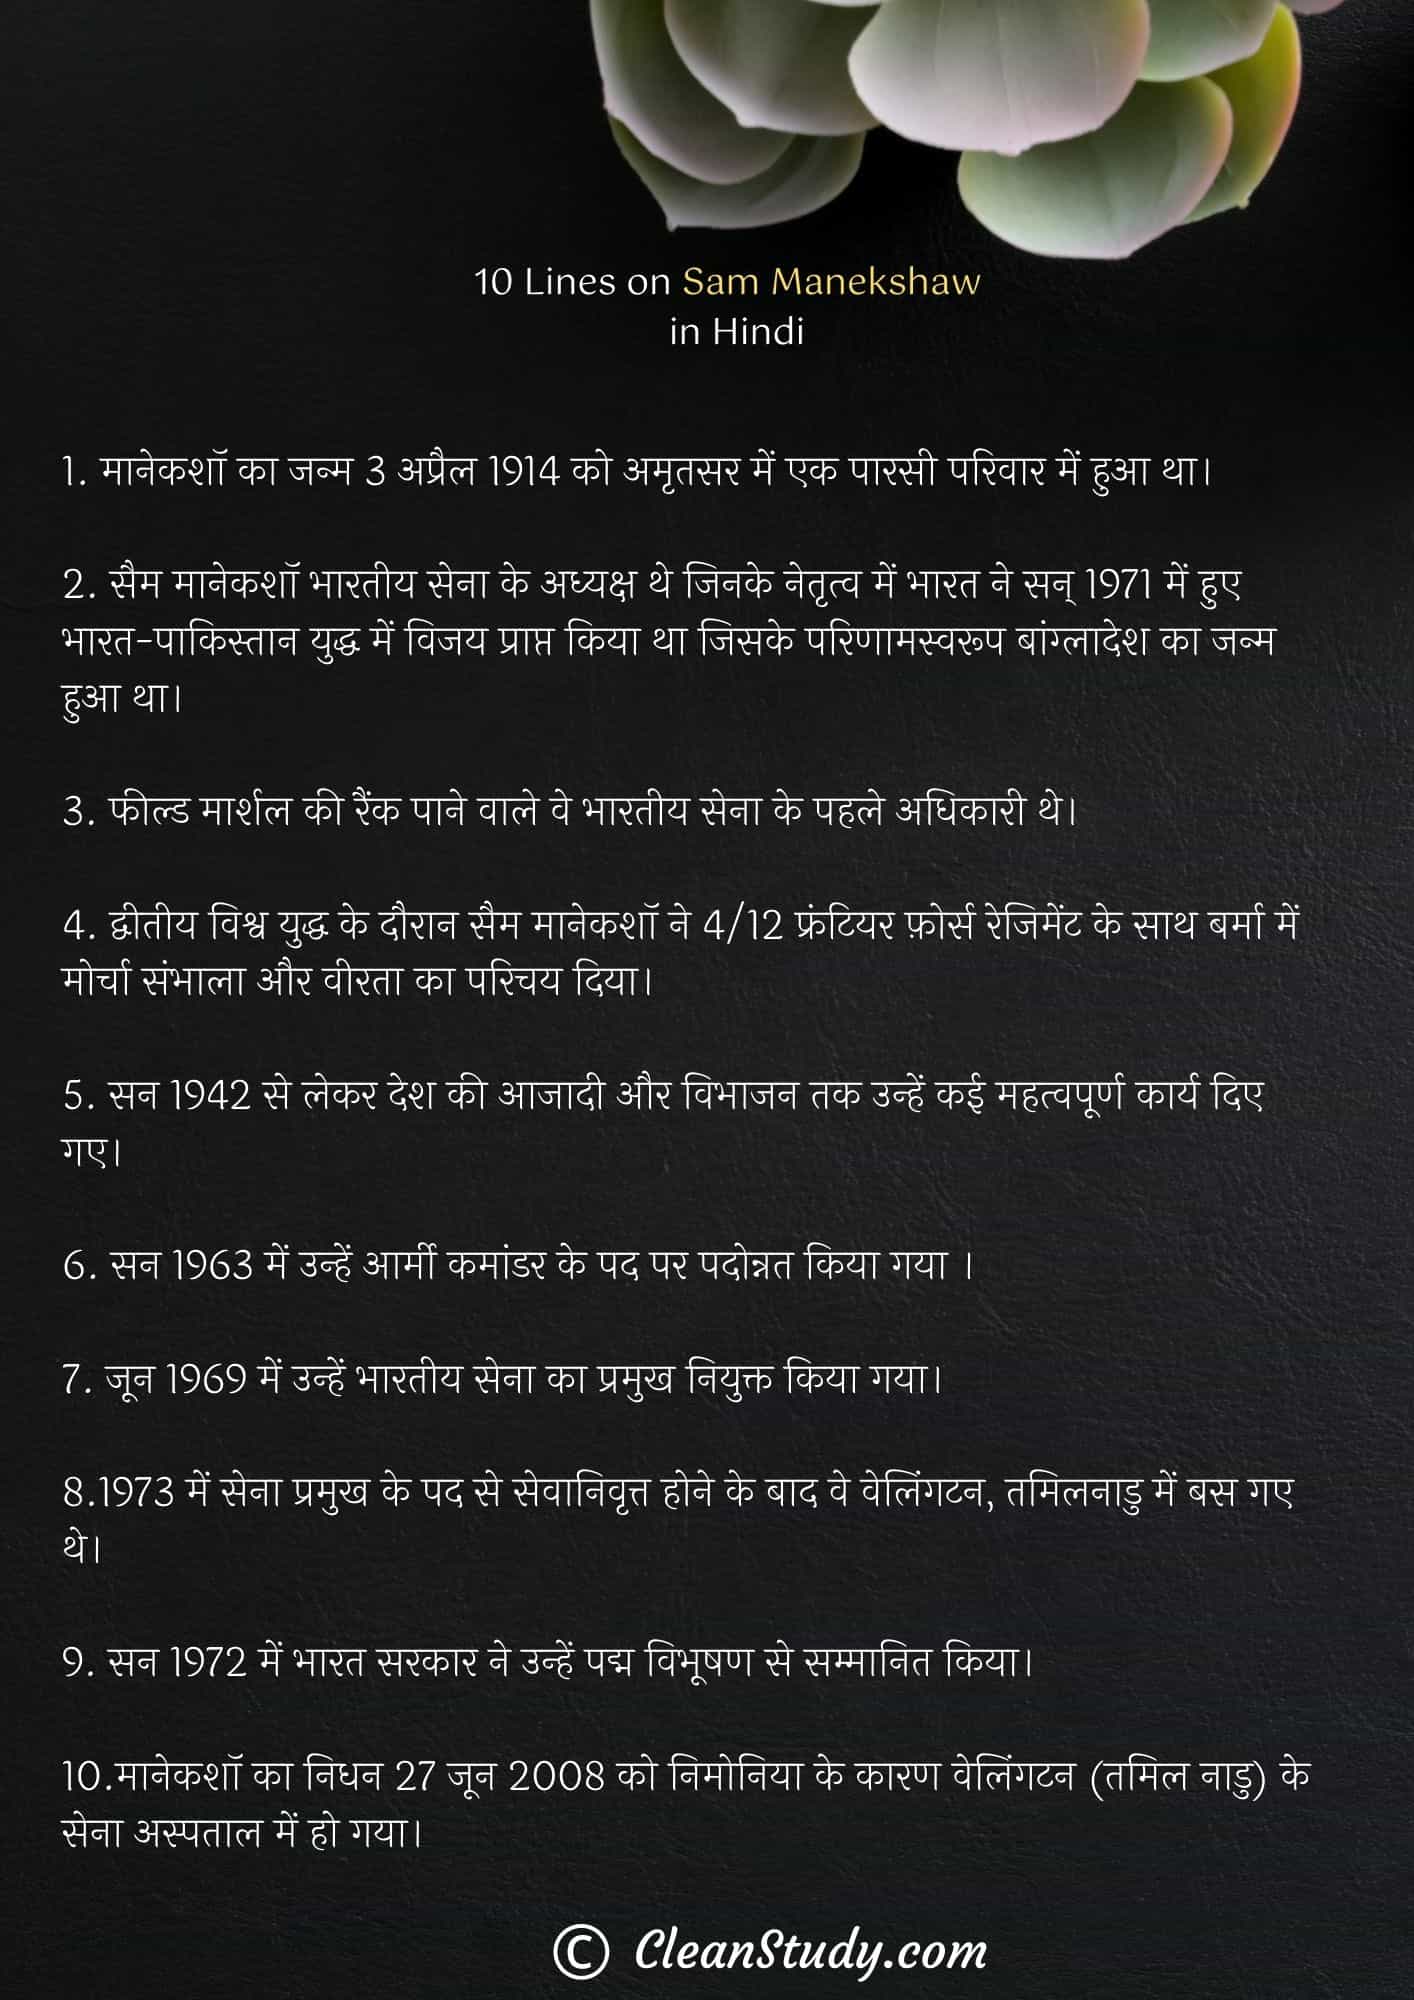 10 Lines on Sam Manekshaw in Hindi